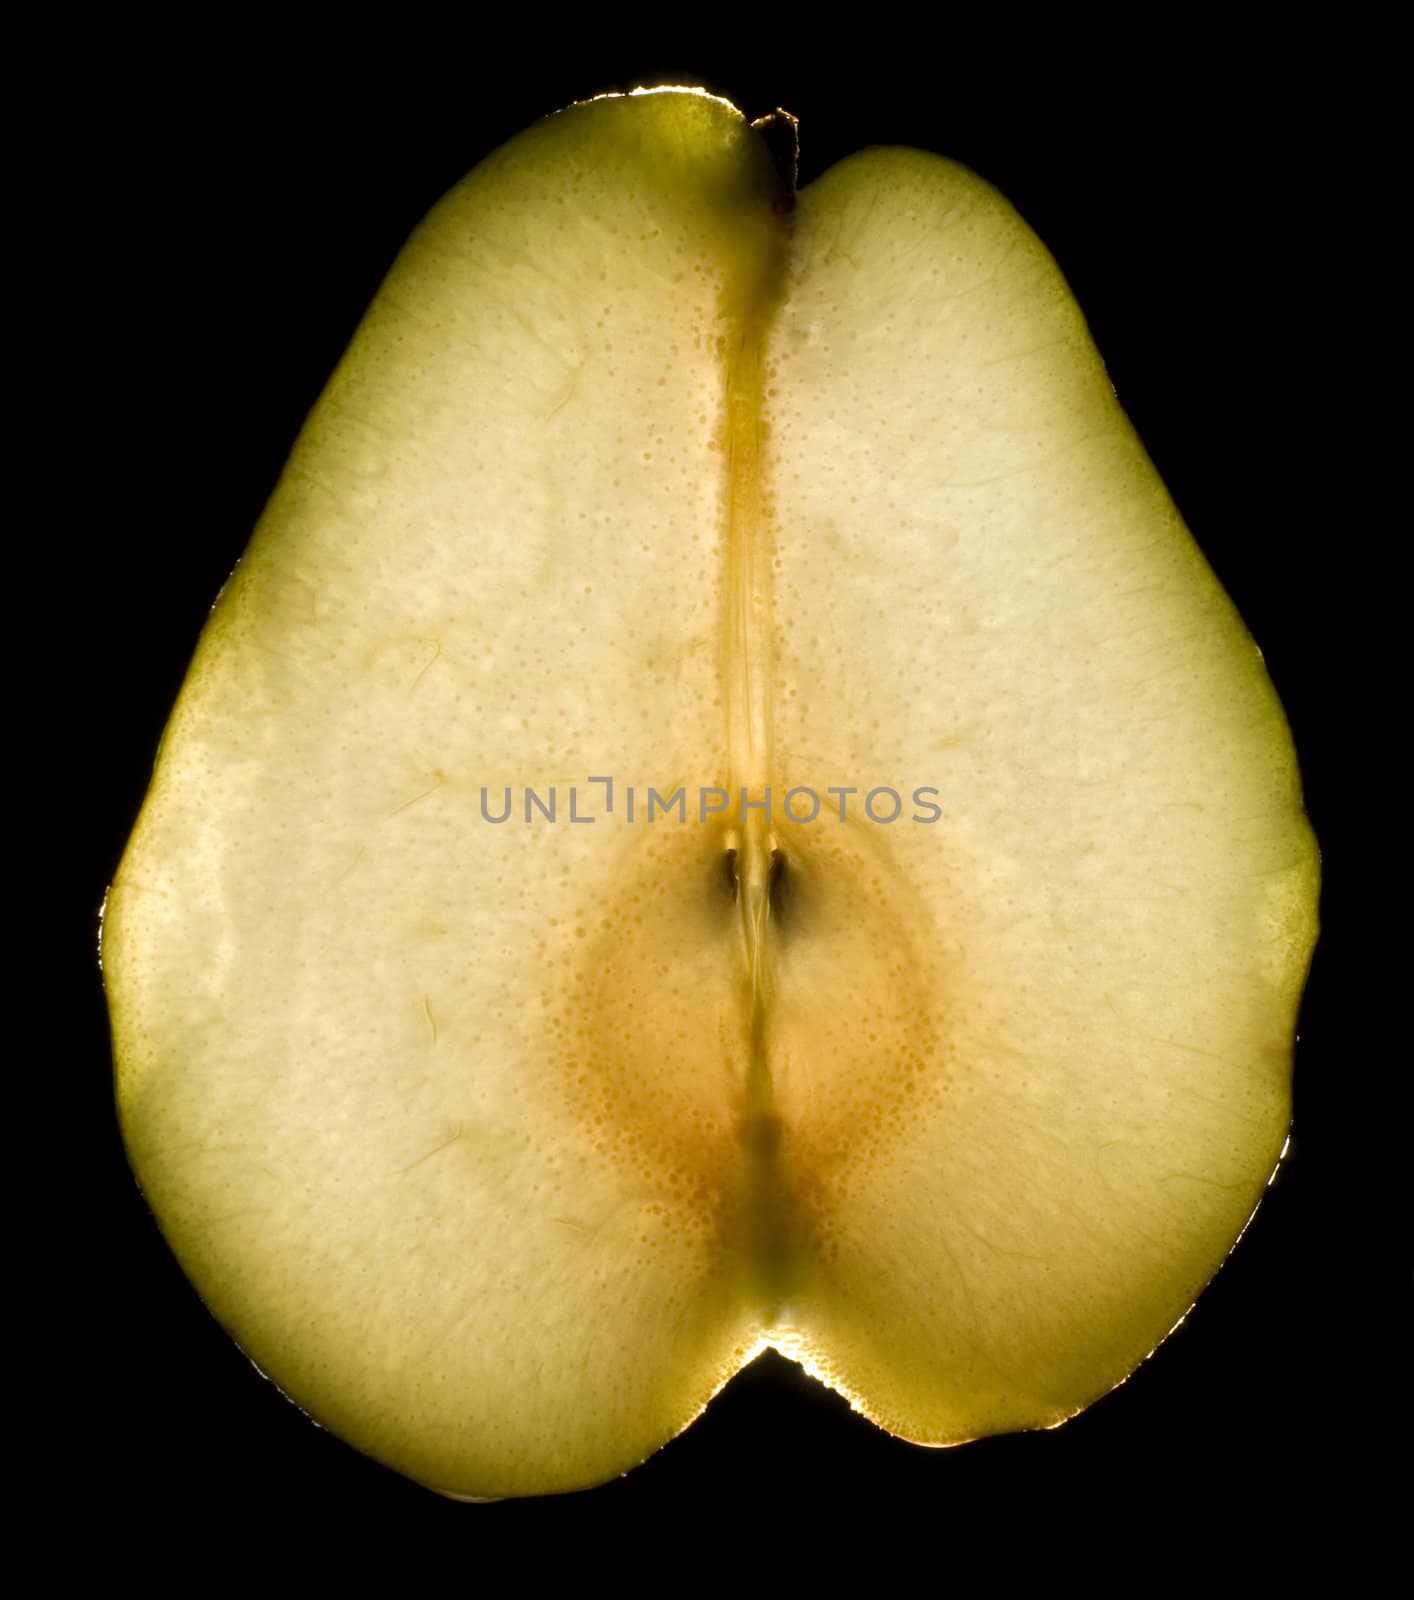 juicy luminous pear on black background